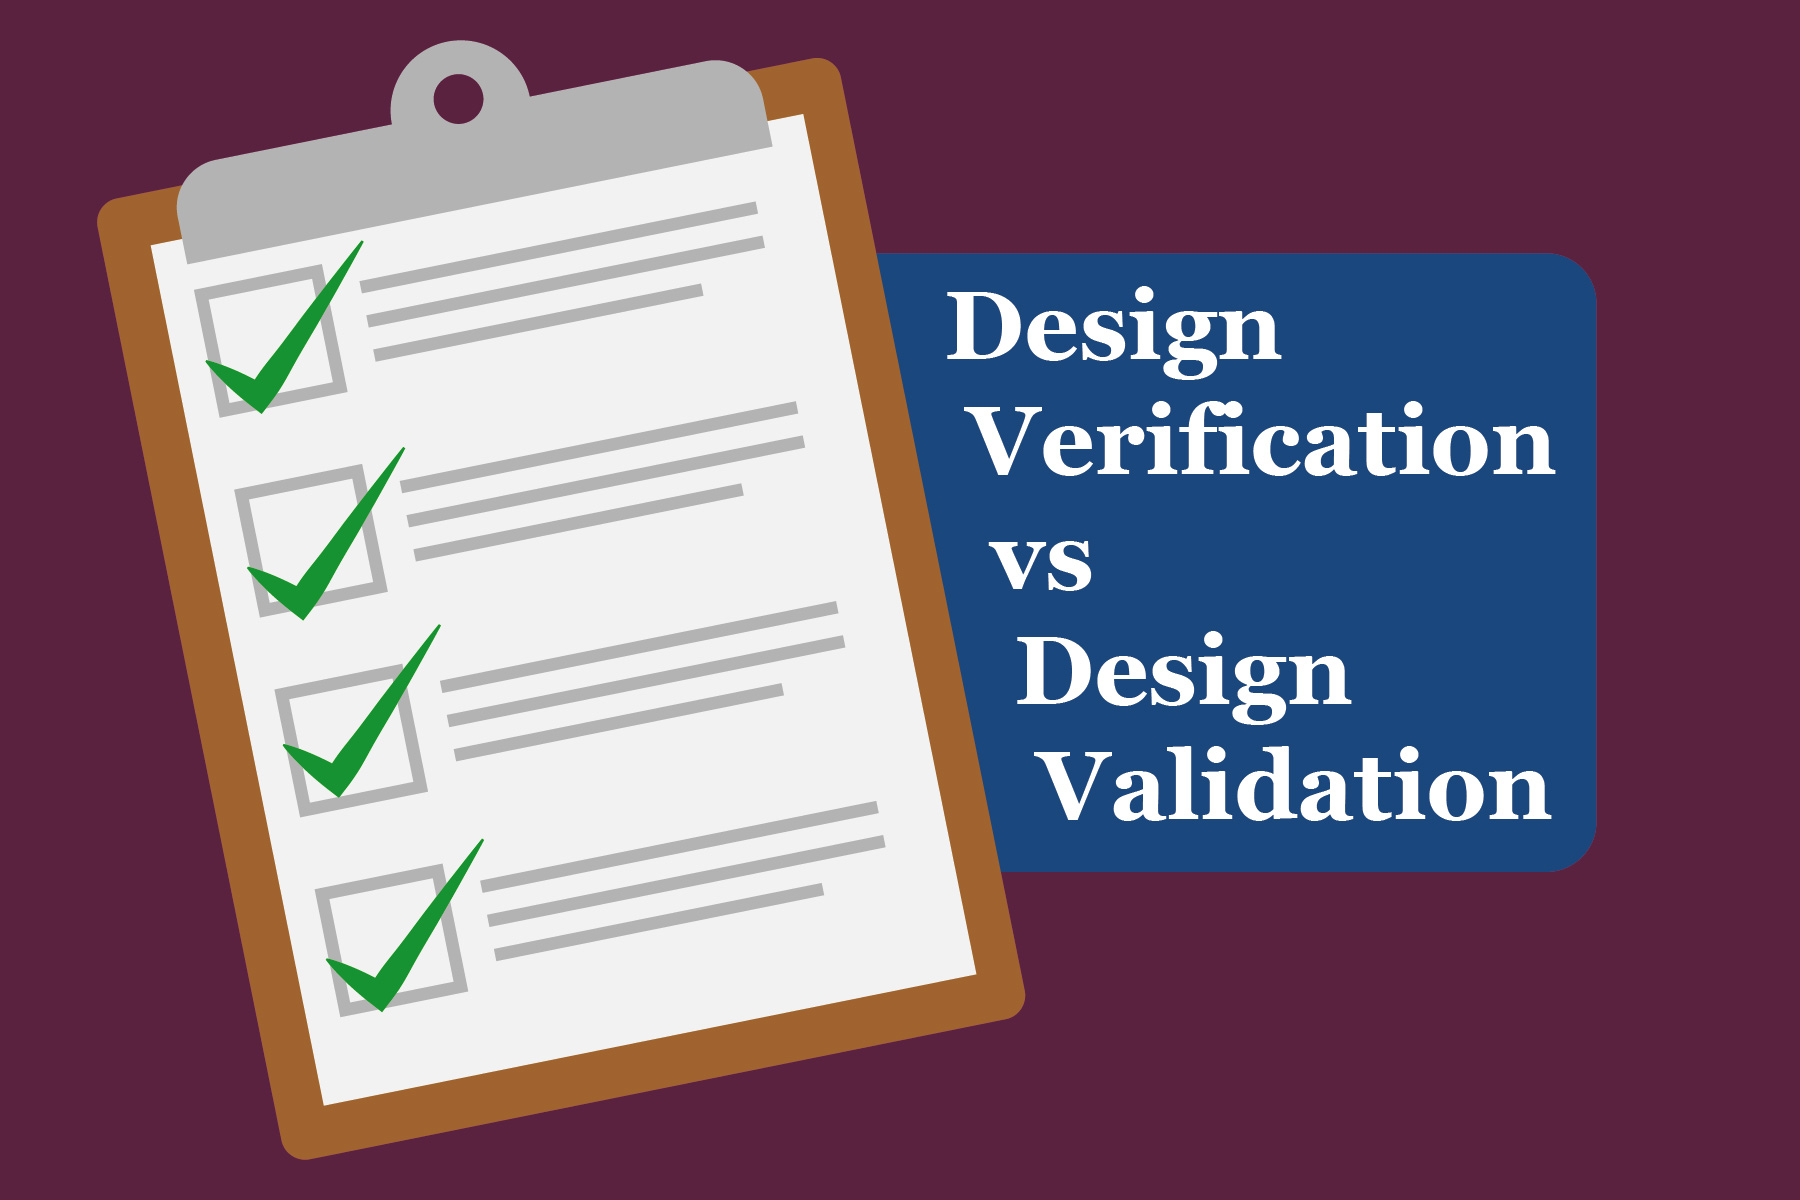 Design Verification vs Design Validation